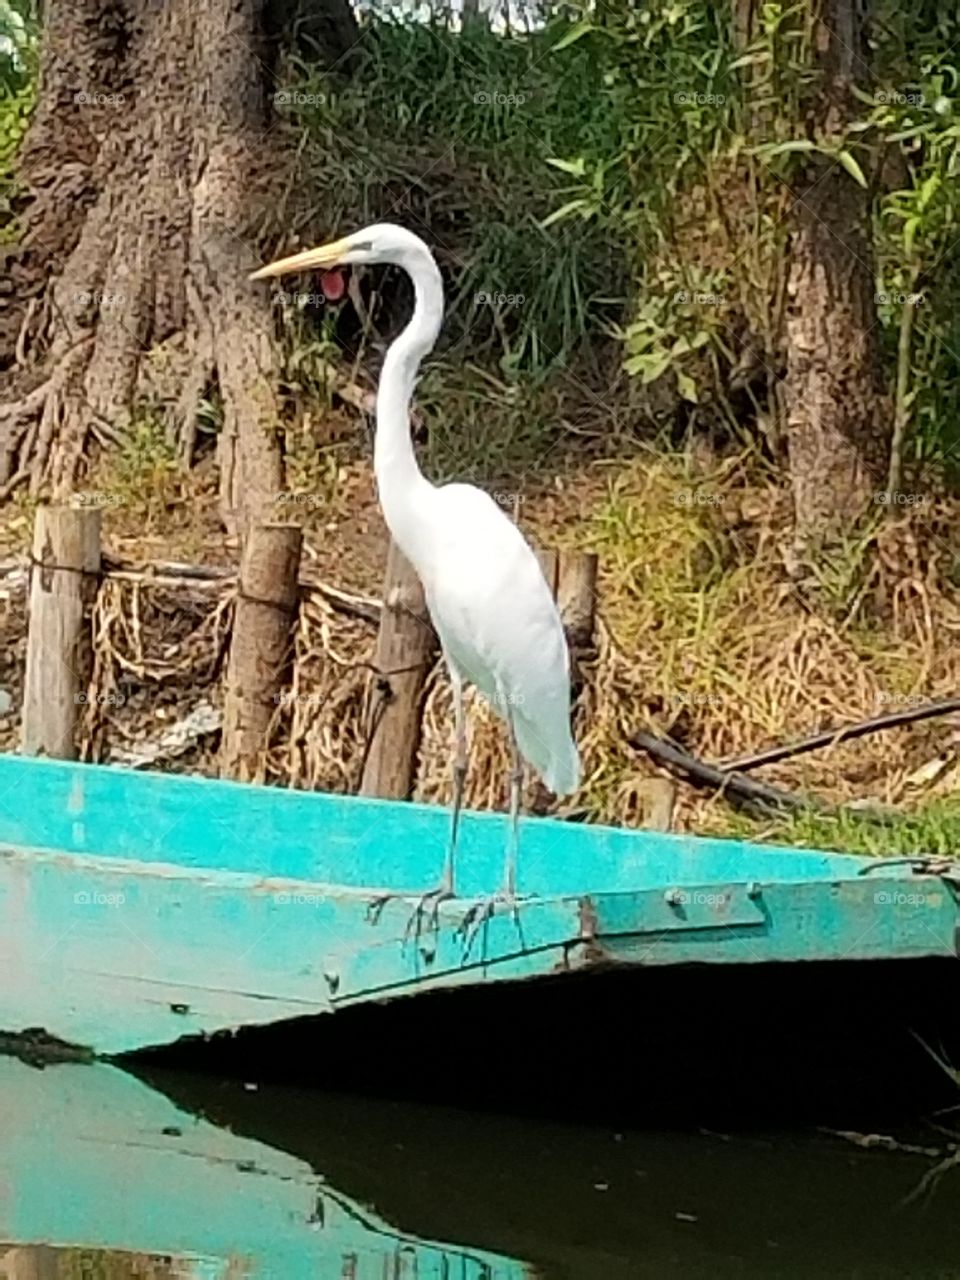 Crane on a boat